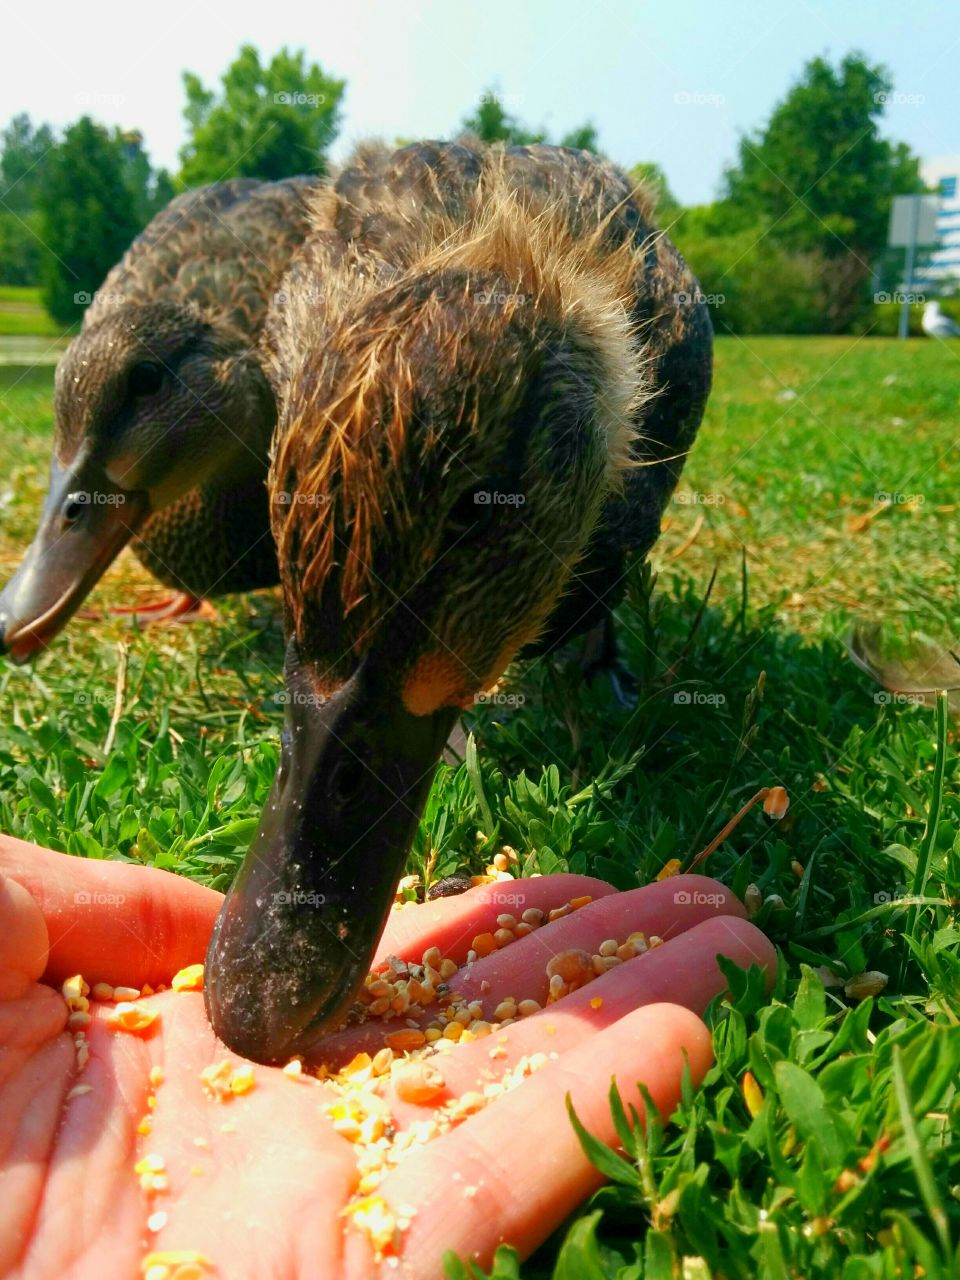 Ducks feeding from hand. feeding ducks by the lake on sunny day